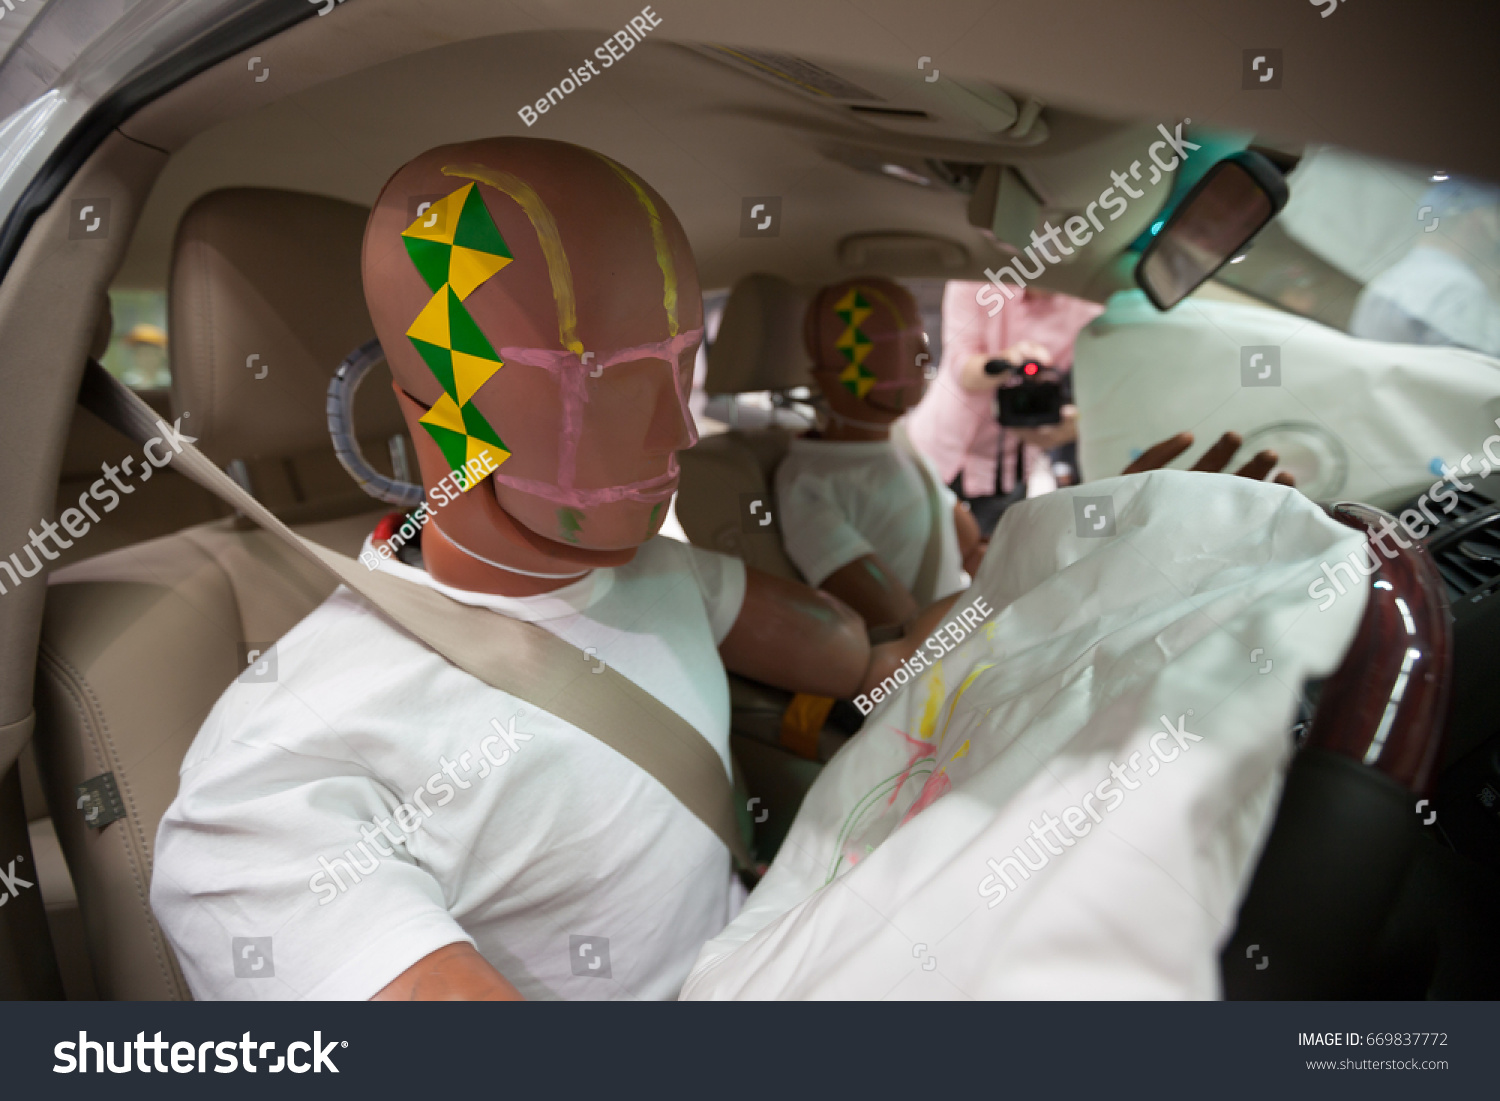 Crash Test Dummies in a car after a Crash Test. #669837772